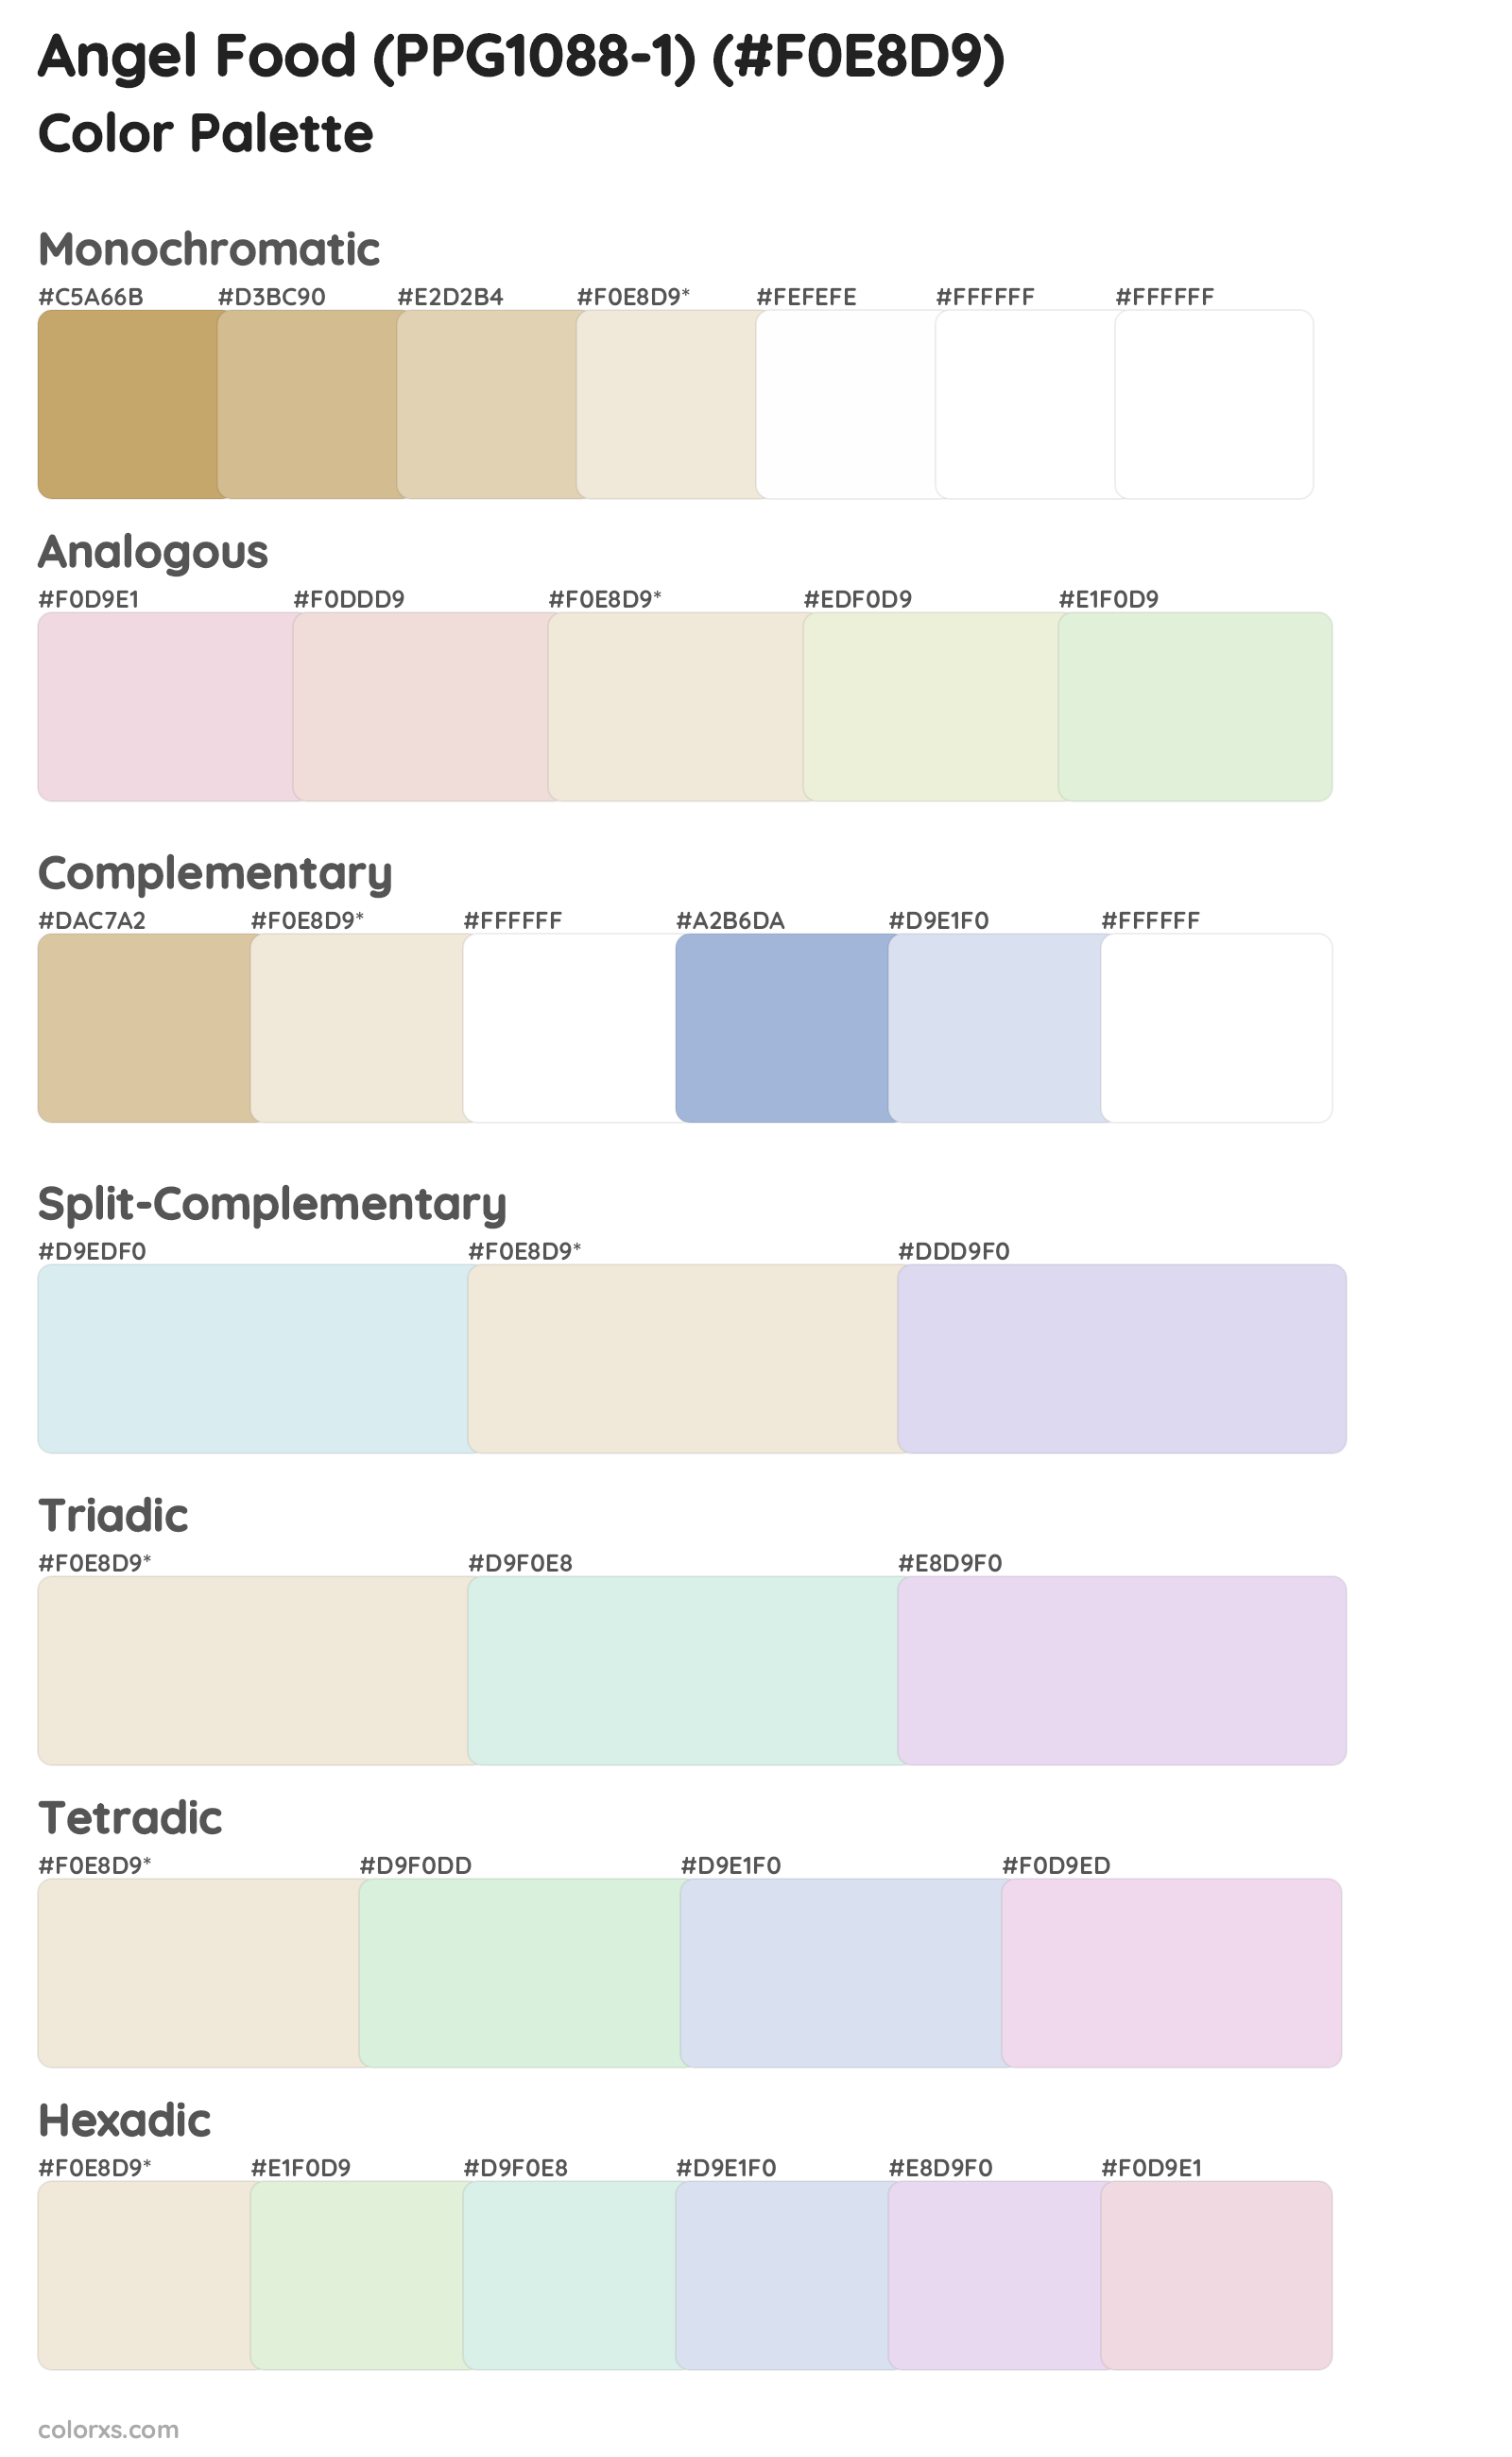 Angel Food (PPG1088-1) Color Scheme Palettes